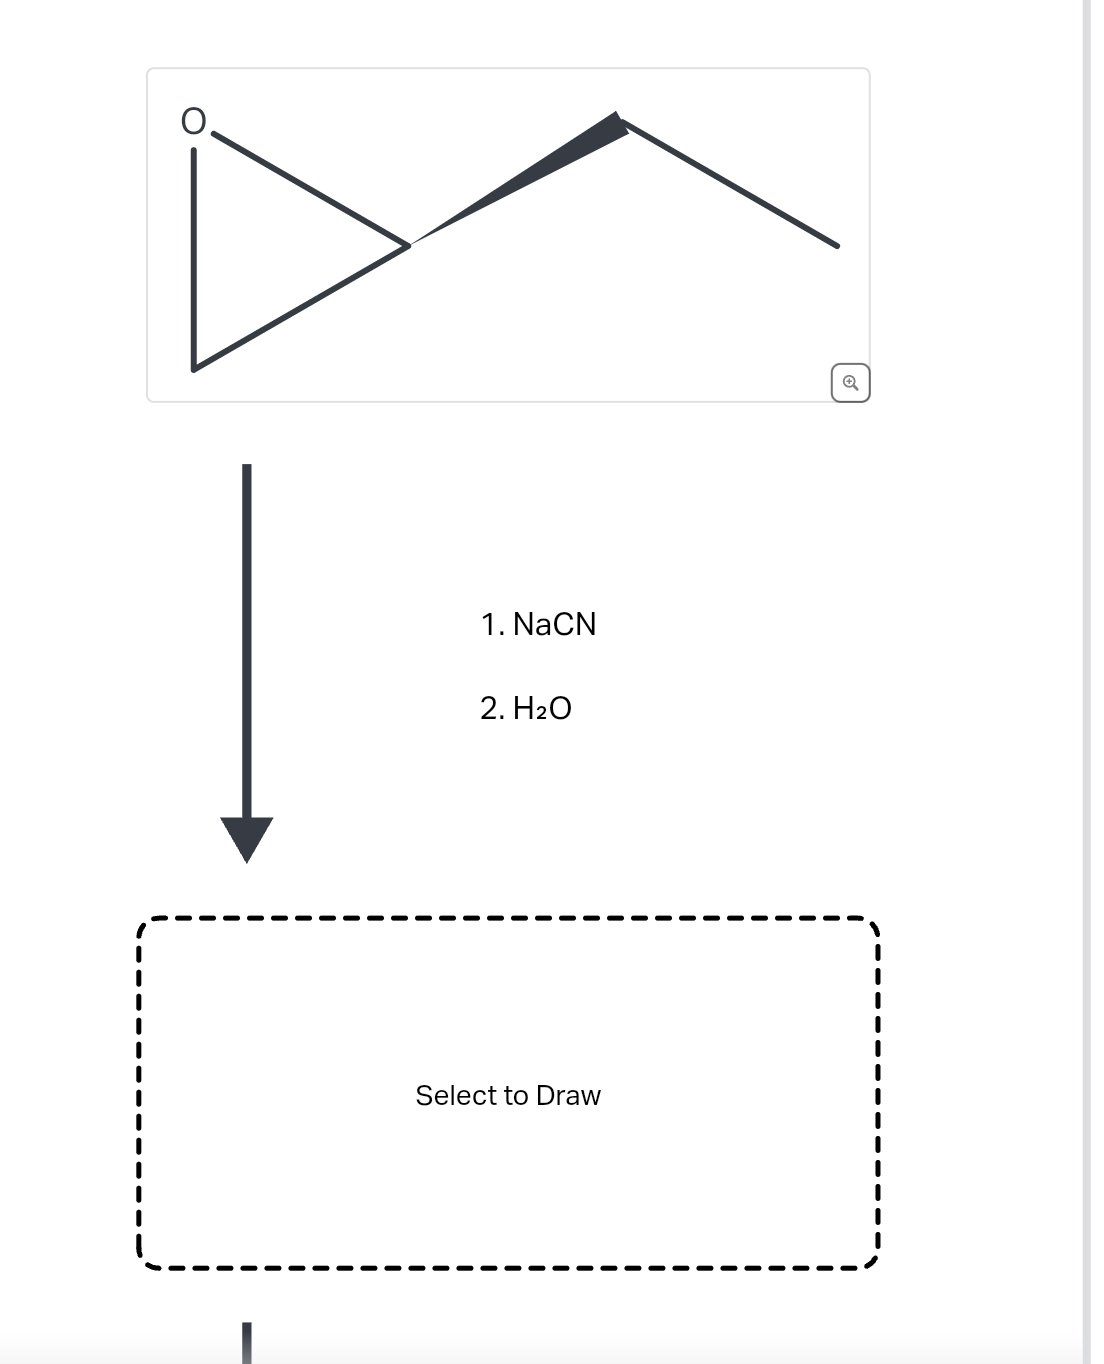 1. NaCN
2. H₂O
Select to Draw
Q